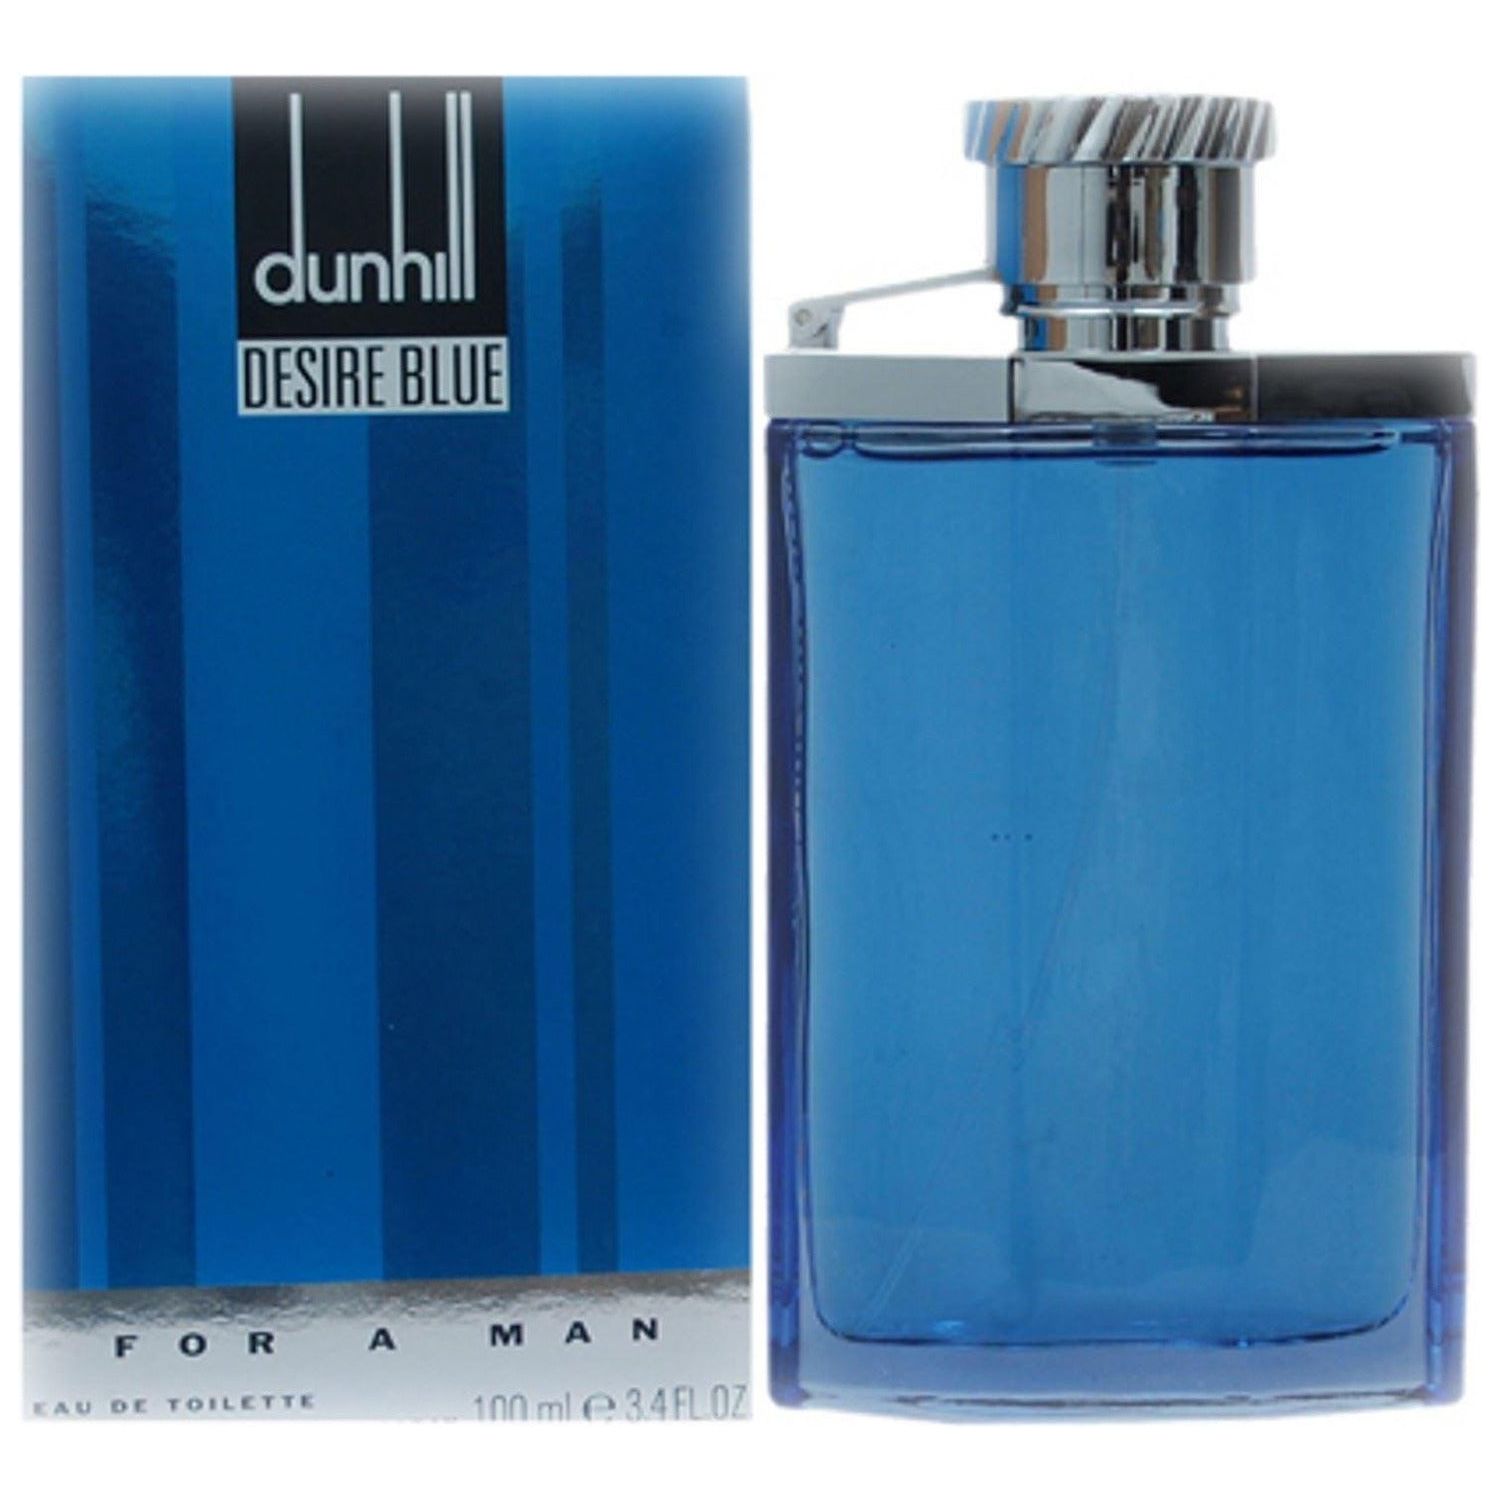 Мужской парфюм blue. Desire Blue Alfred Dunhill. Dunhill Blue туалетная вода. Desire Blue Alfred Dunhill для мужчин. Духи Dunhill мужские Desire Blue.